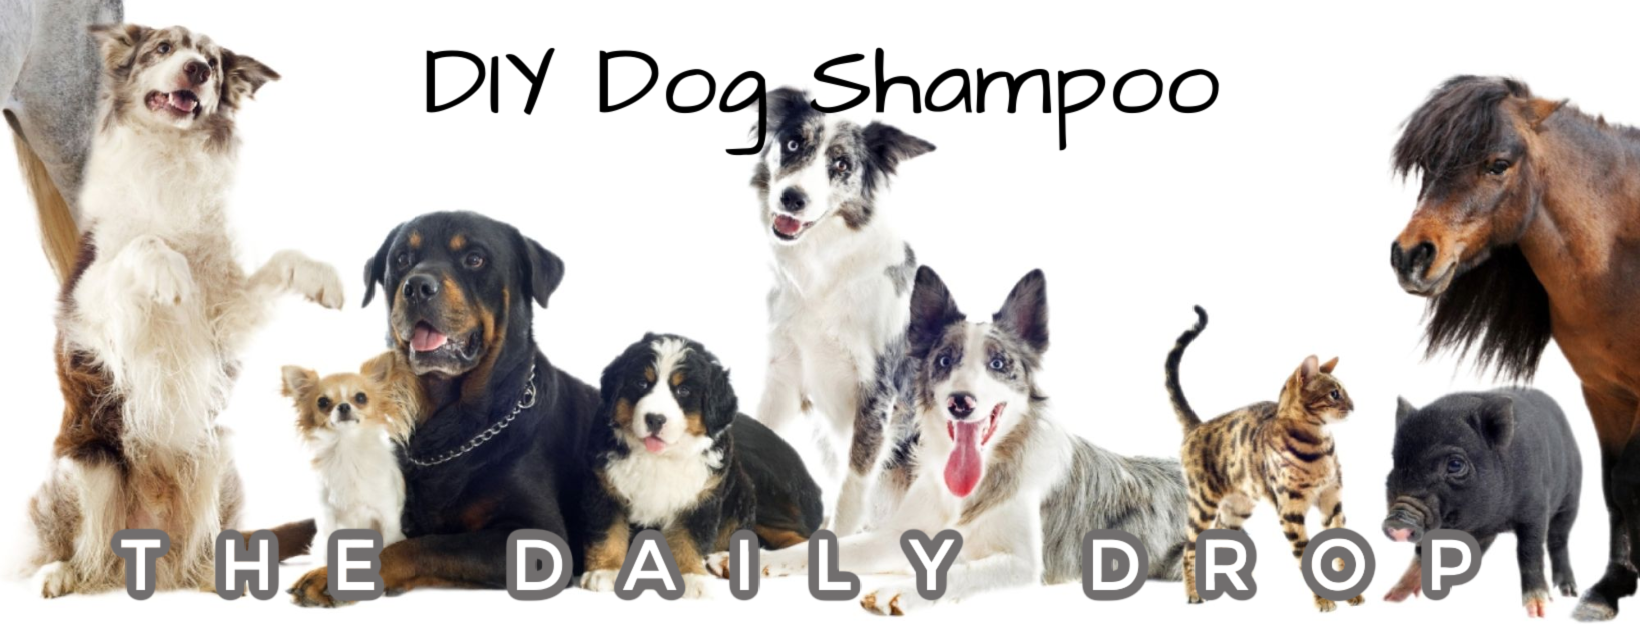 DIY Dog Shampoo | From Sandy